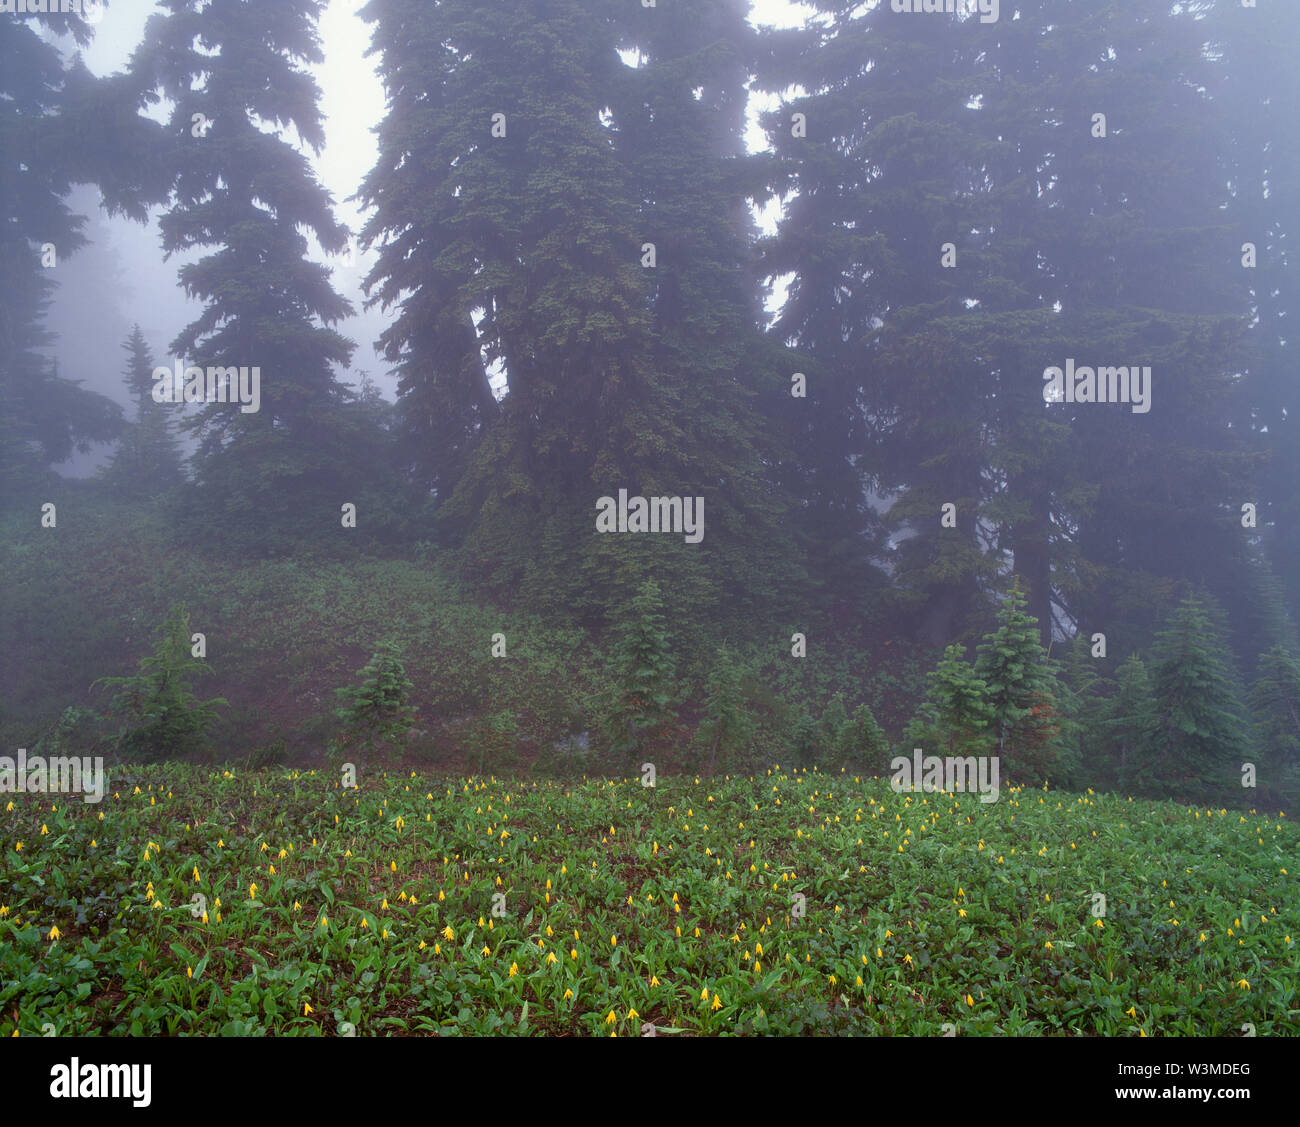 USA, Washington, Mt. Rainier National Park, Subalpine meadow in fog with glacier lilies and evergreen trees; Paradise area. Stock Photo